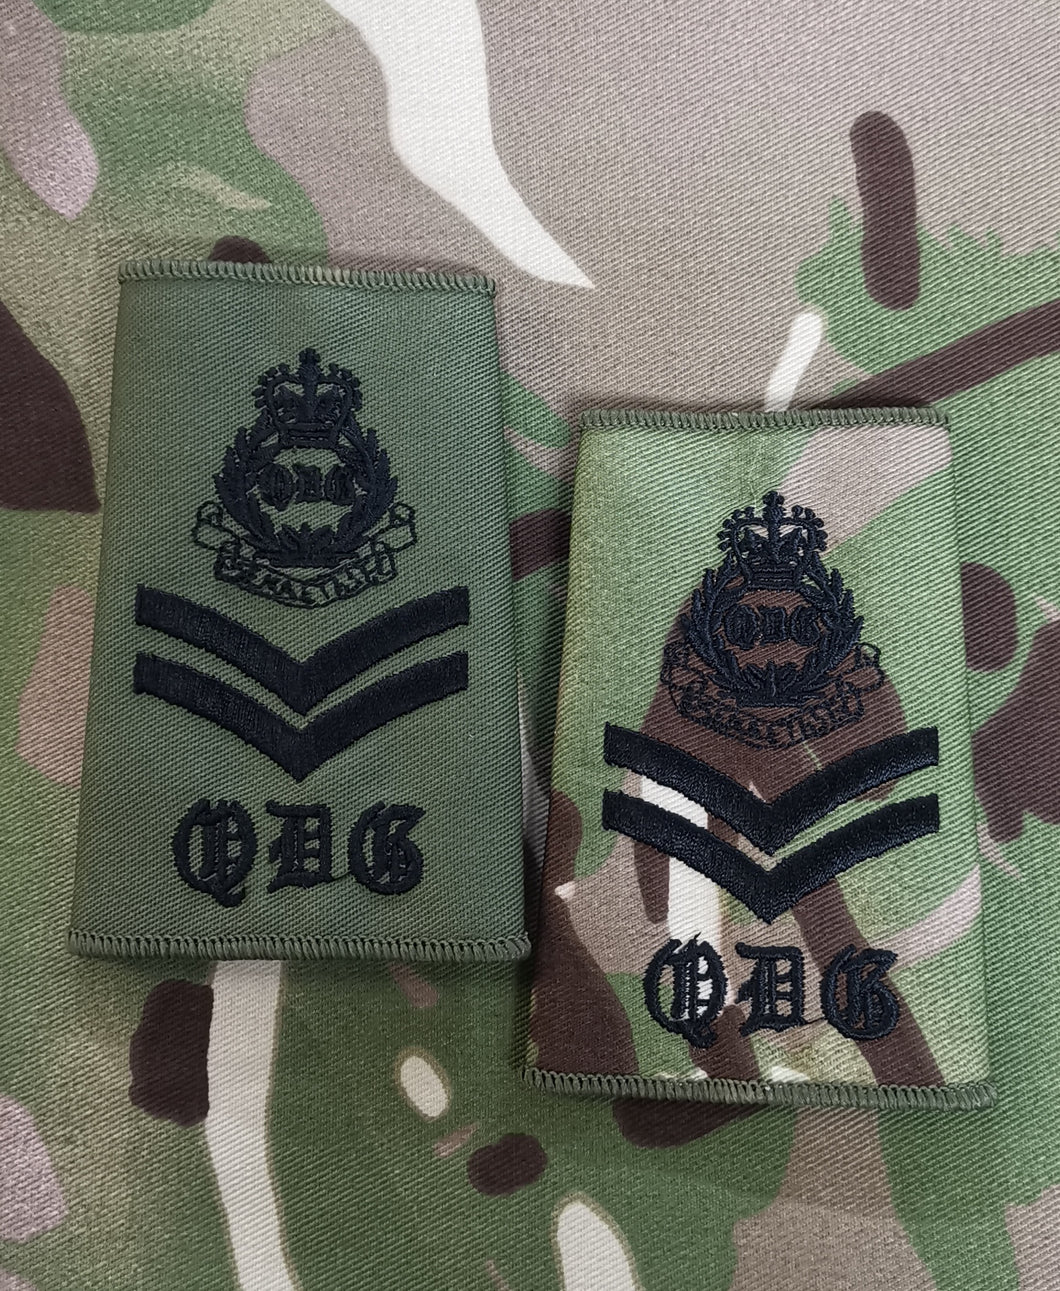 QDG Corporal (Cpl) Subdued Rank Slide (EIIR)